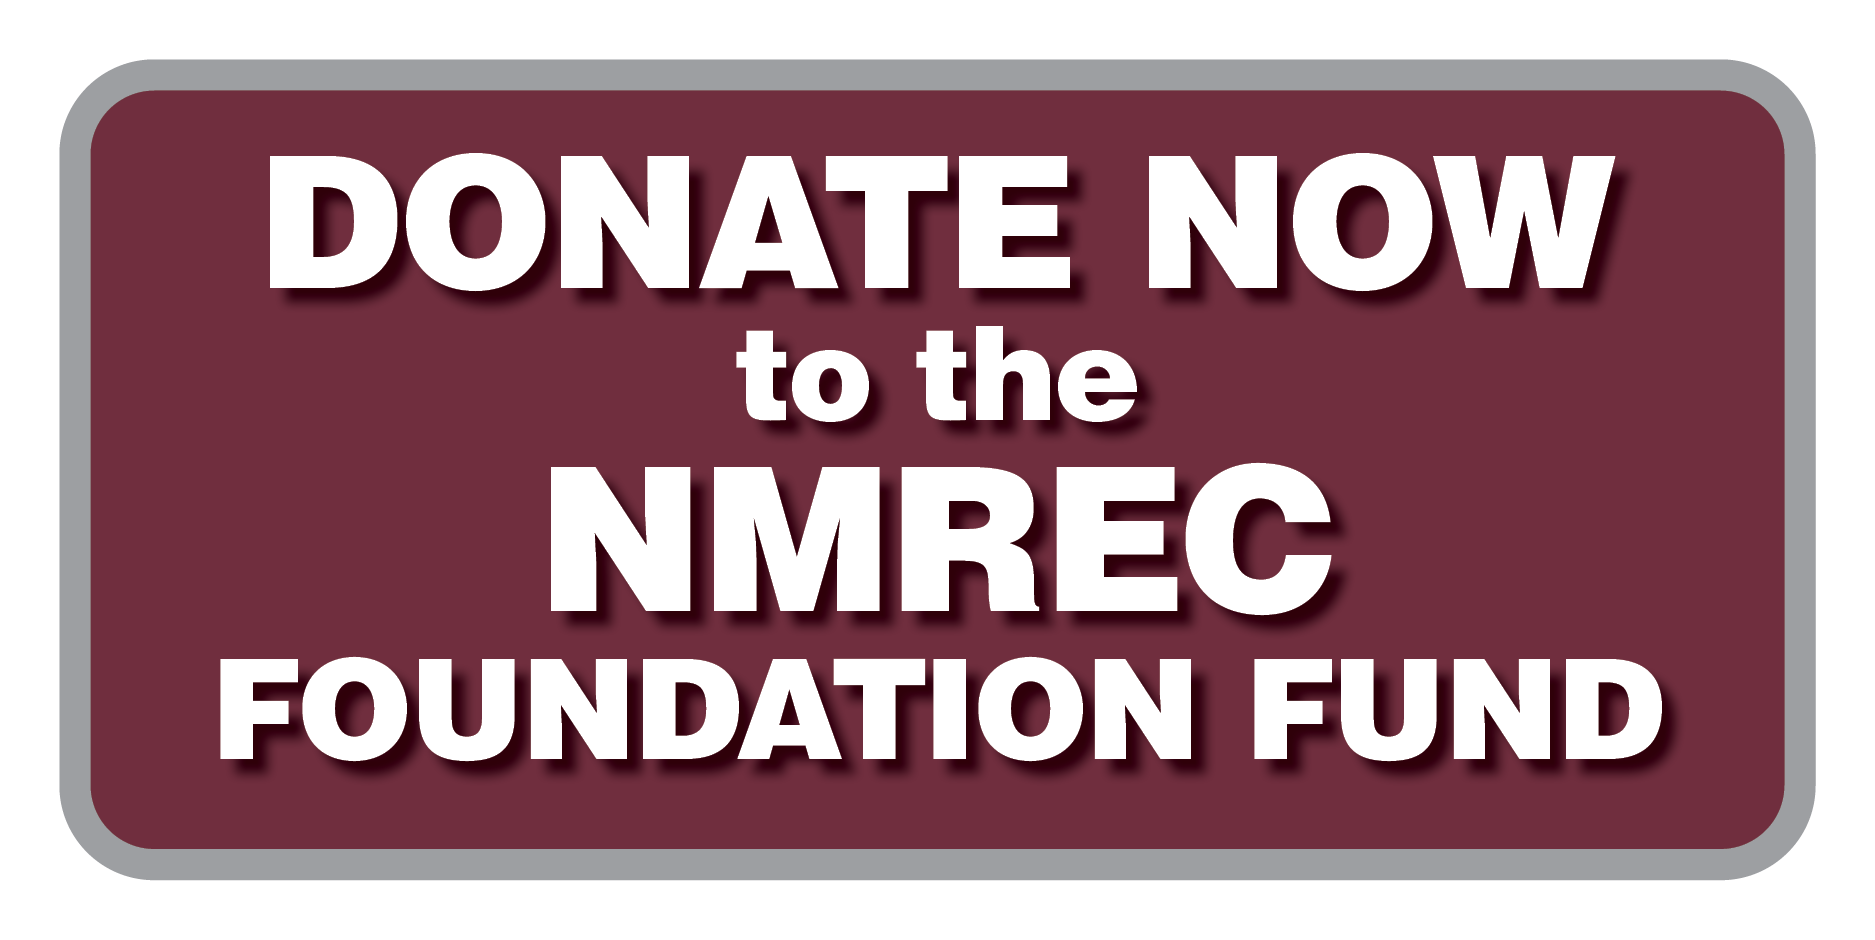 o the NMREC Foundation Fund.